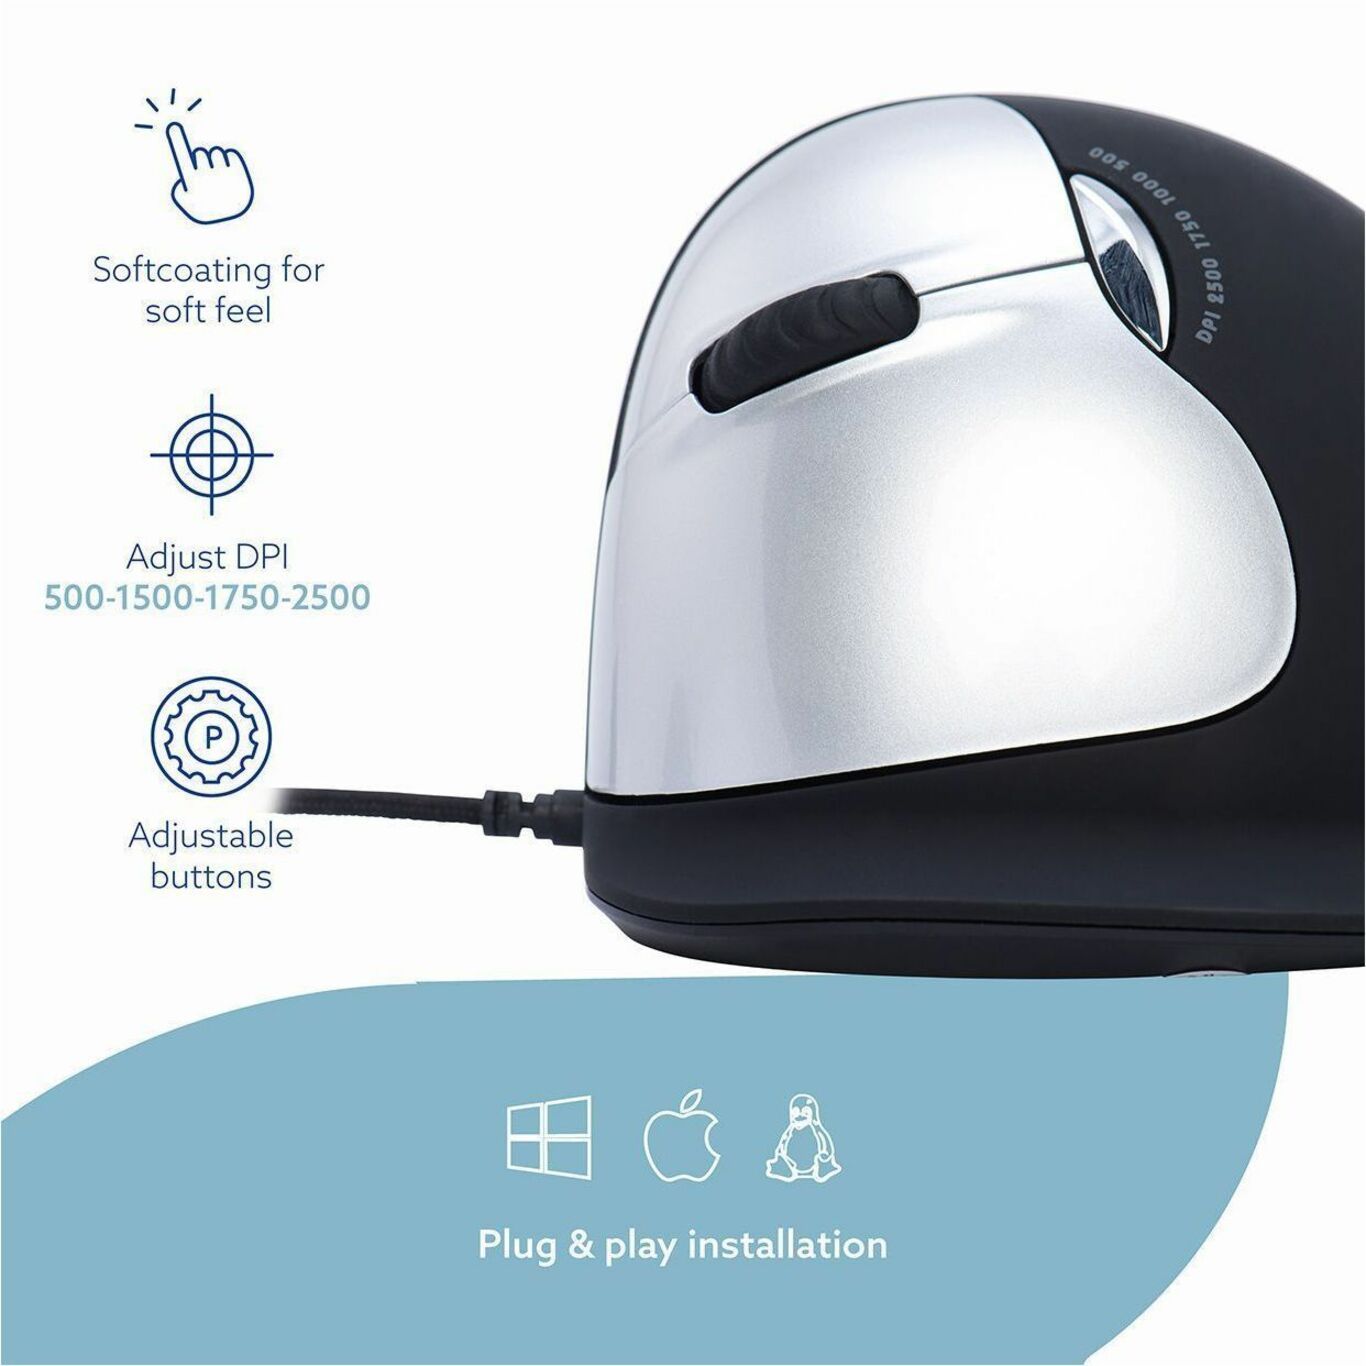 R-Go RGOBRHEMLL HE Break Mouse, Left-Handed Ergonomic Fit, Large Size, 5 Buttons, 2500 dpi, USB 2.0